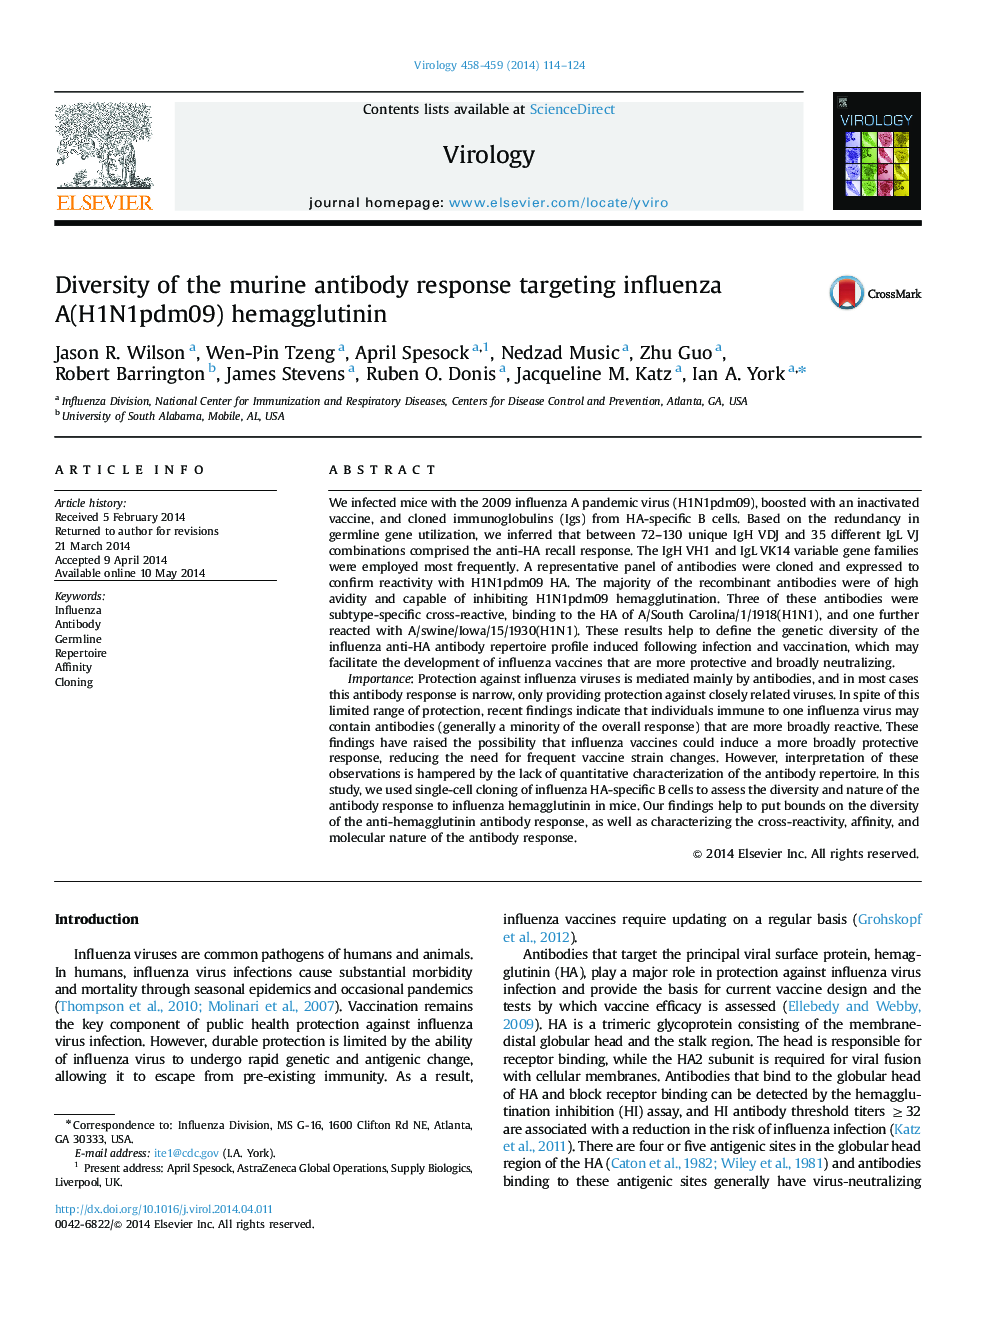 Diversity of the murine antibody response targeting influenza A(H1N1pdm09) hemagglutinin